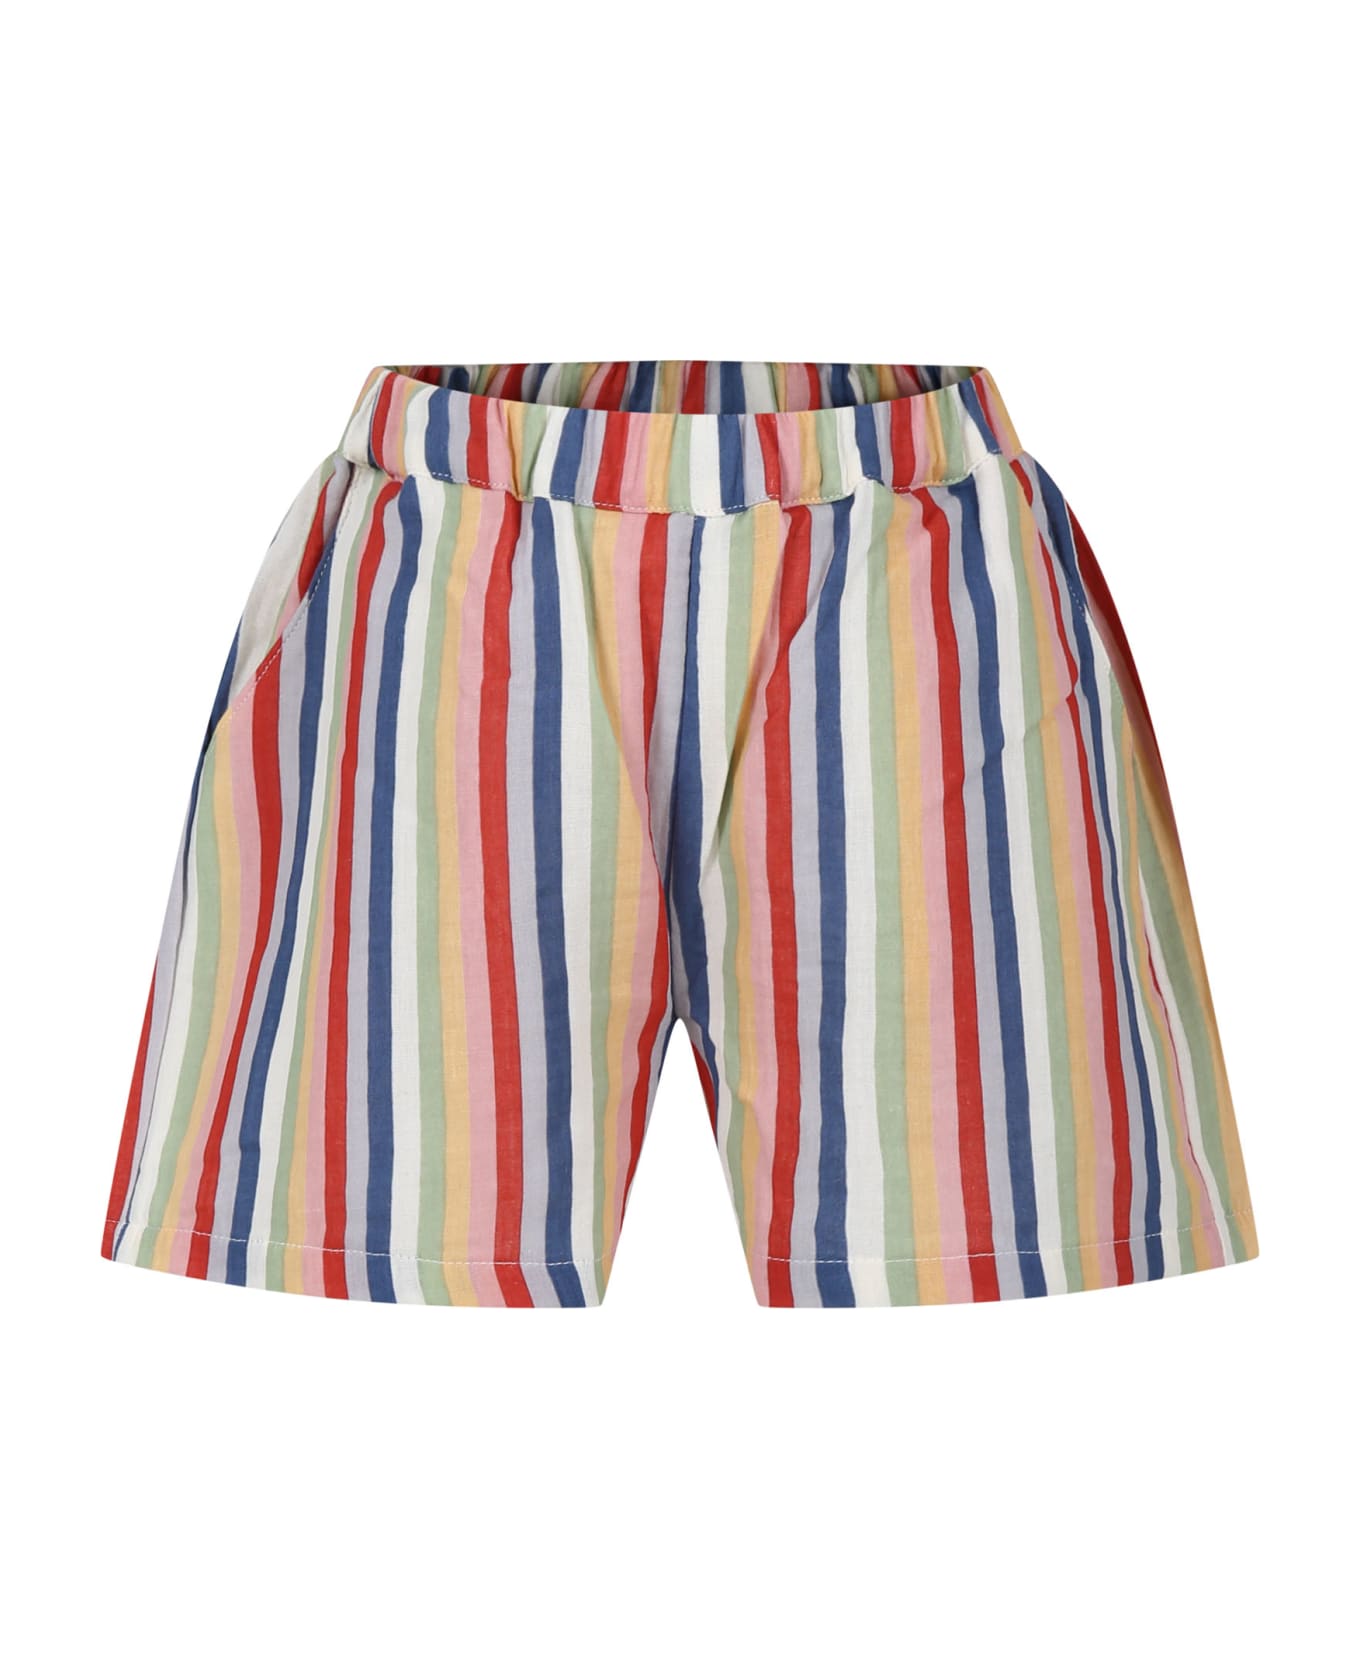 Coco Au Lait Multicolor Shorts For Kidswith Stripes Pattern - Multicolor